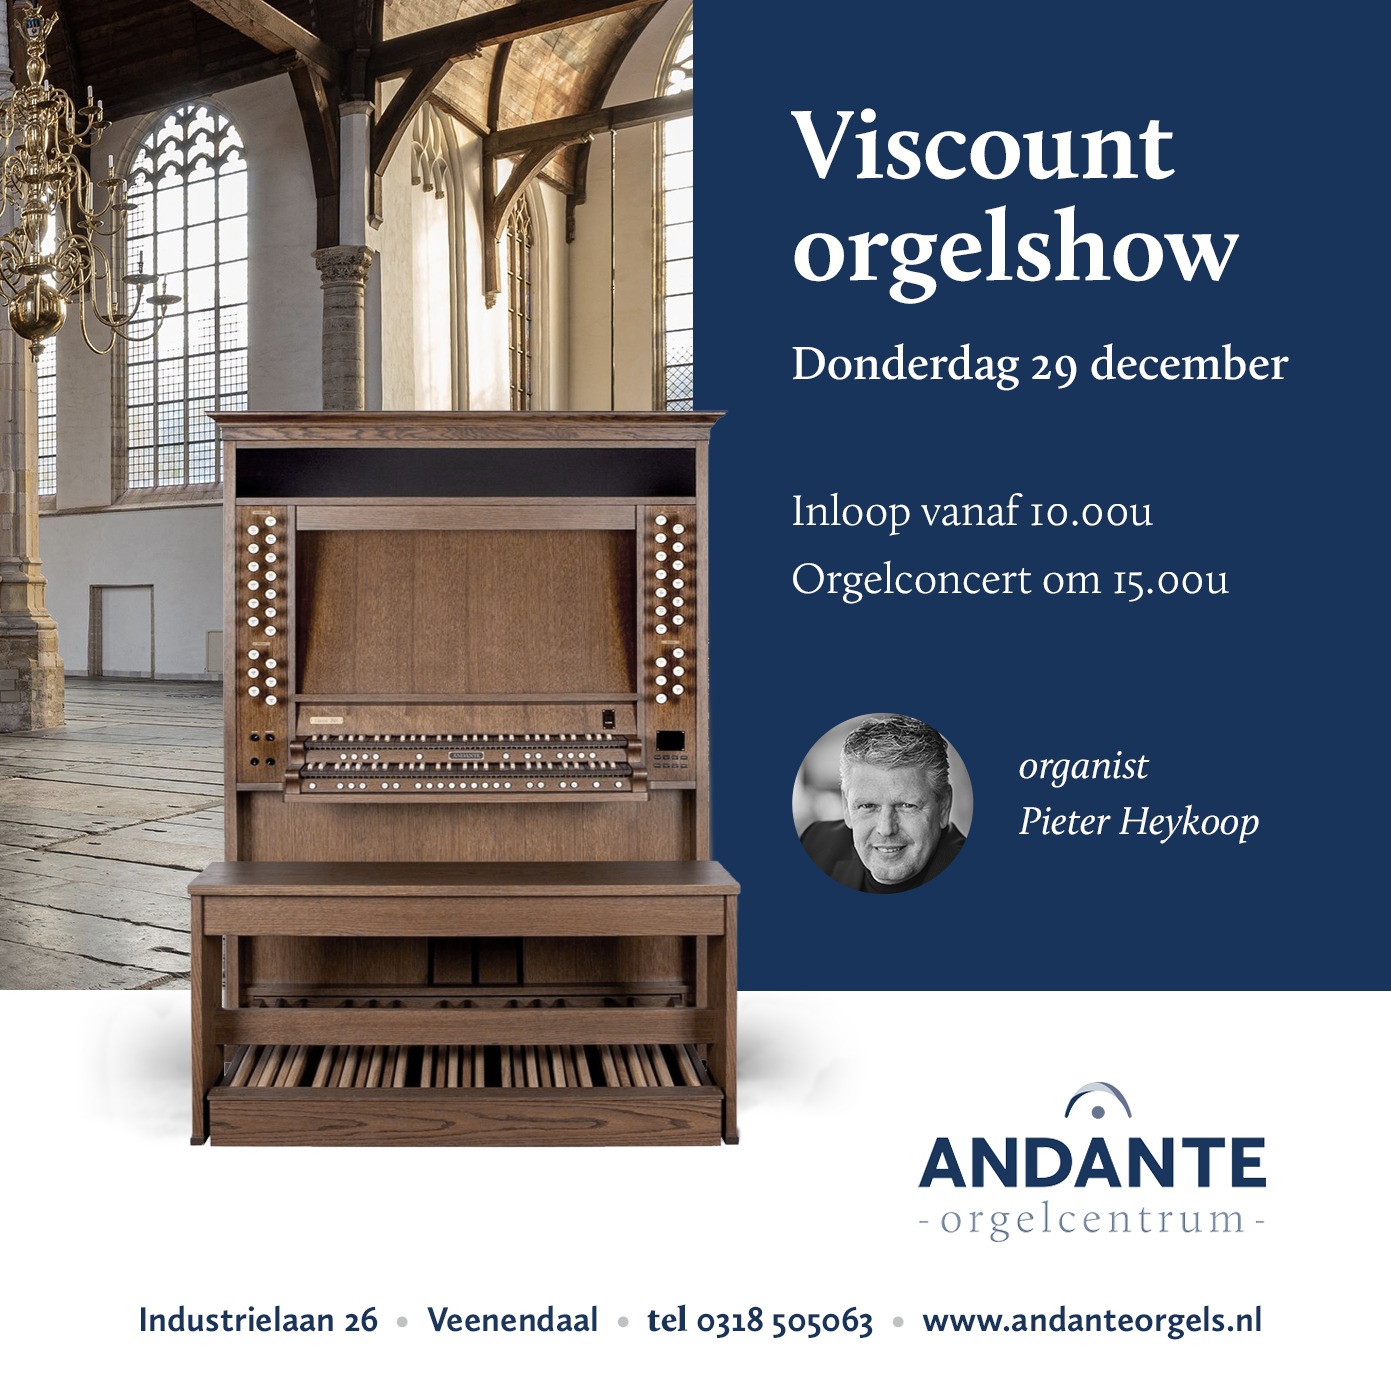 Viscount orgelshow 29 december